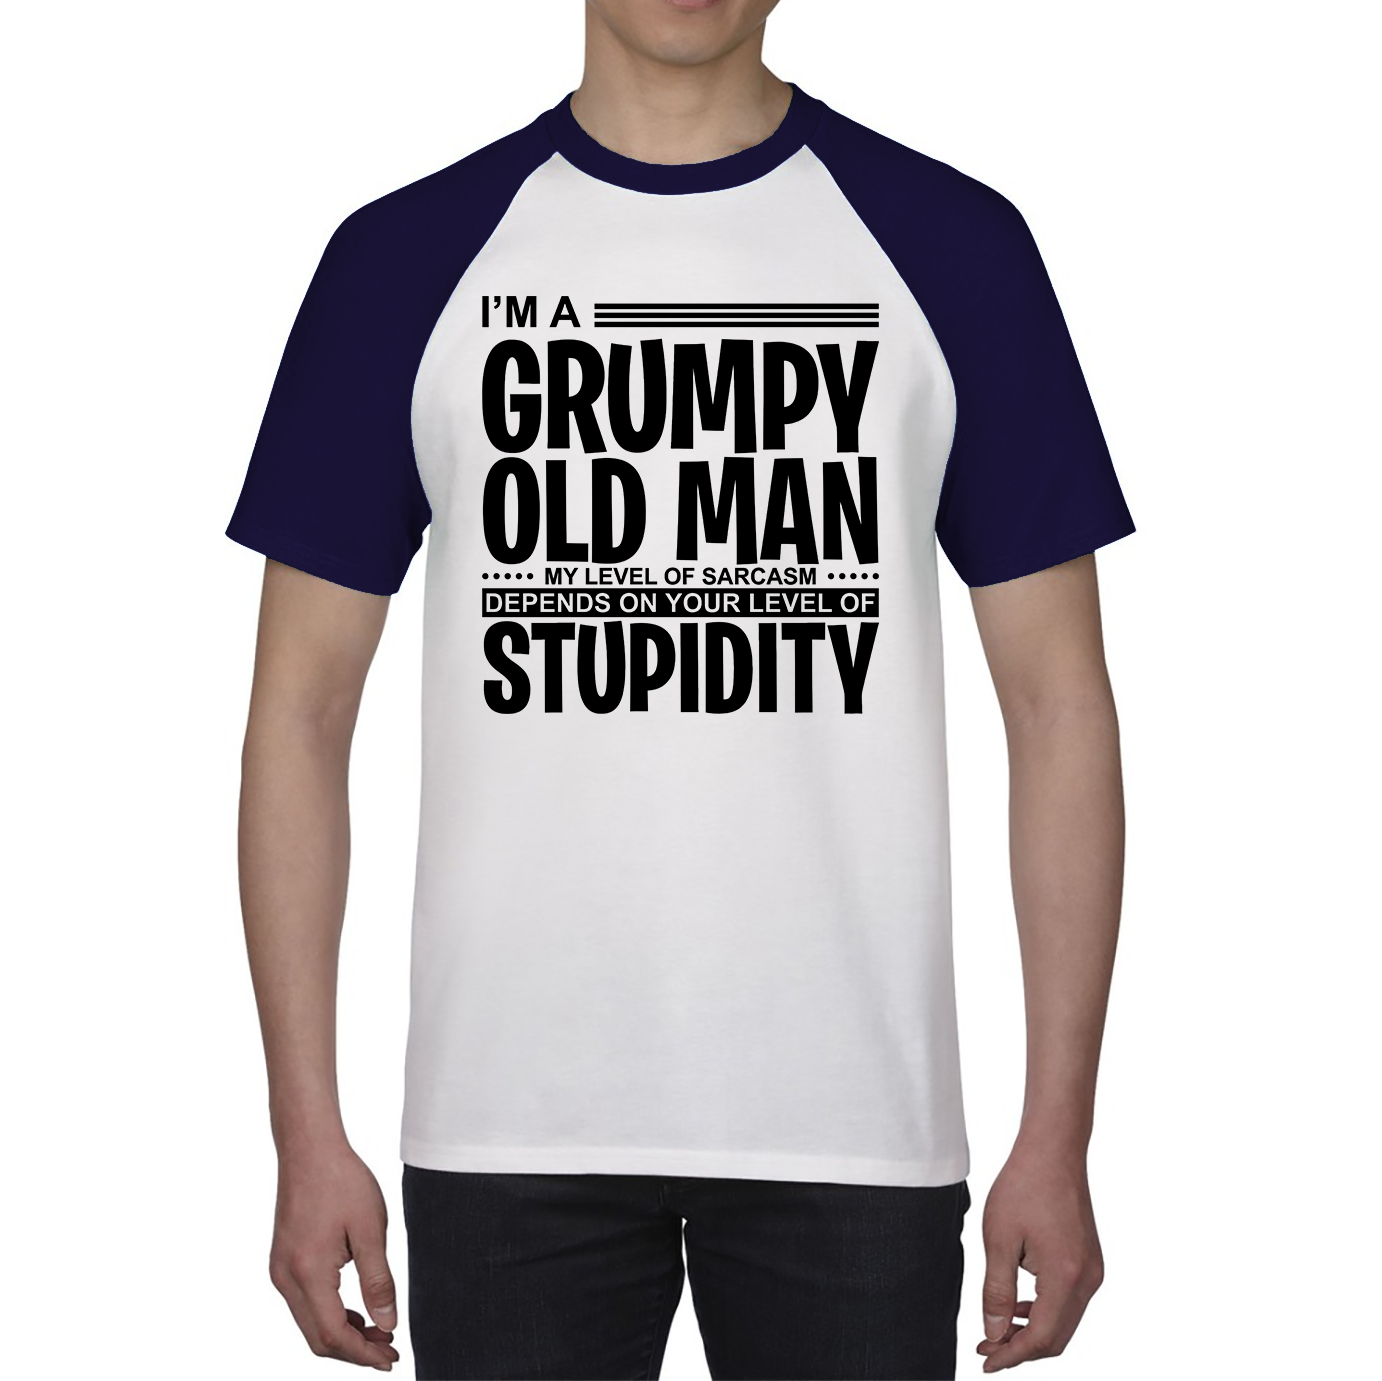 Funny Grandpa Shirt Grumpa Funny Grandpa Shirts Grandpa Gag Gifts